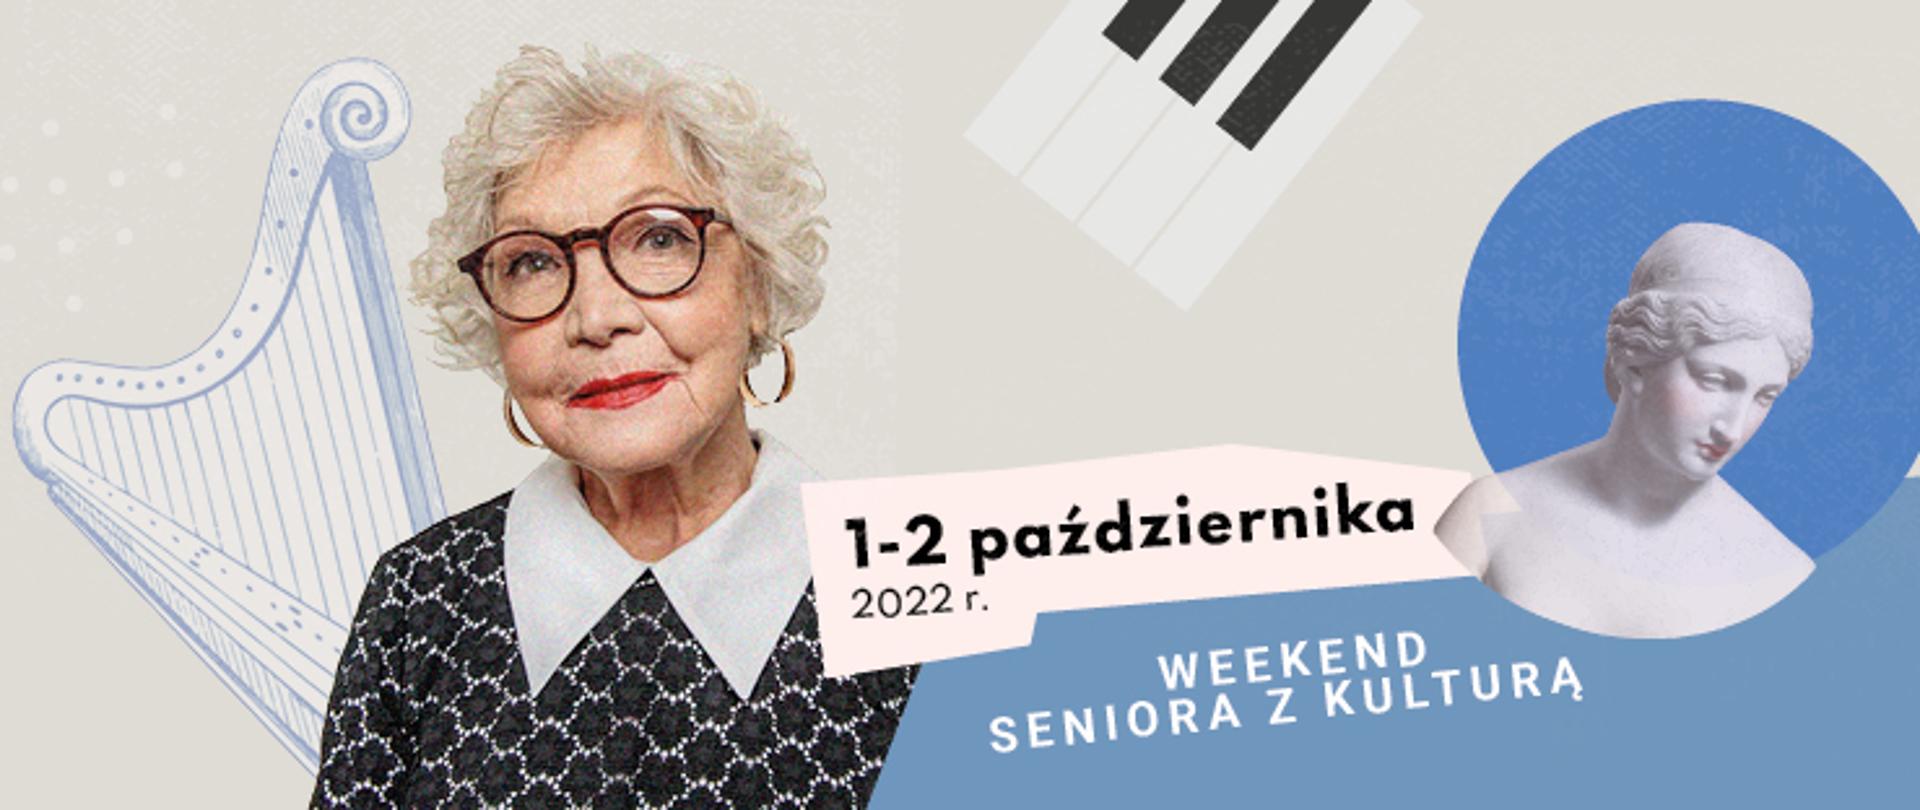 Weekend seniora z kulturą 2022